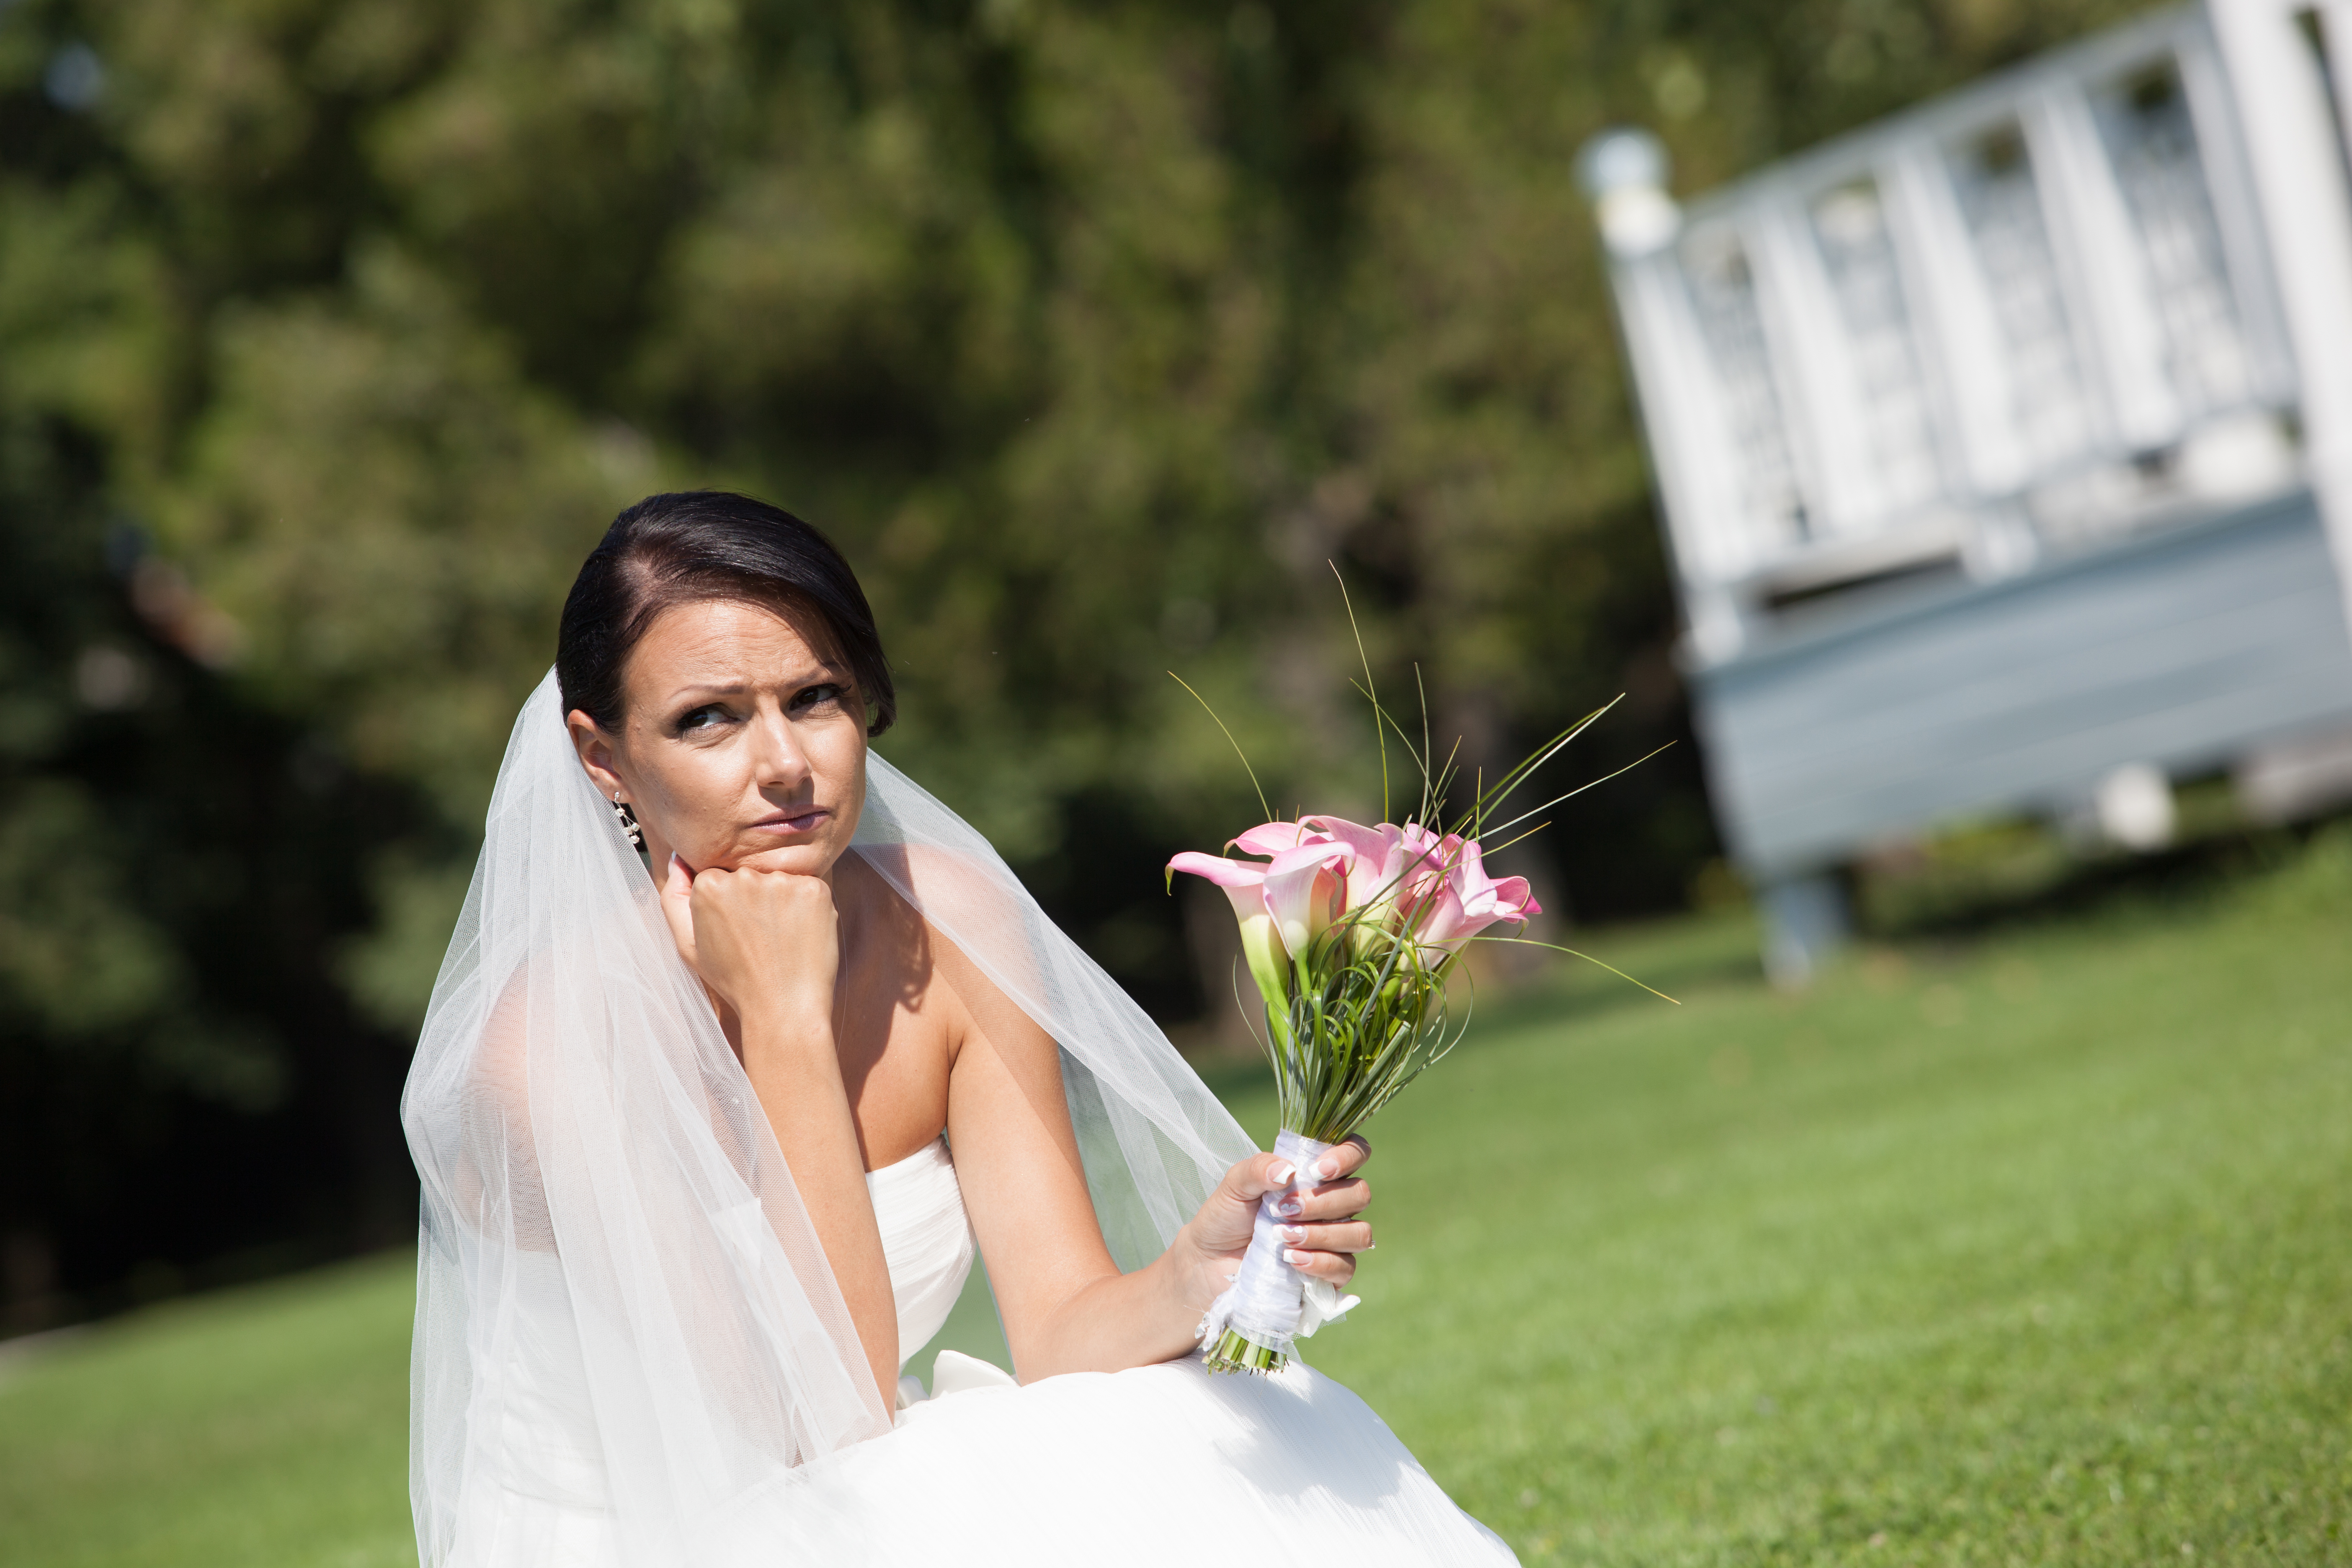 A bride sulking outdoors | Source: Shutterstock